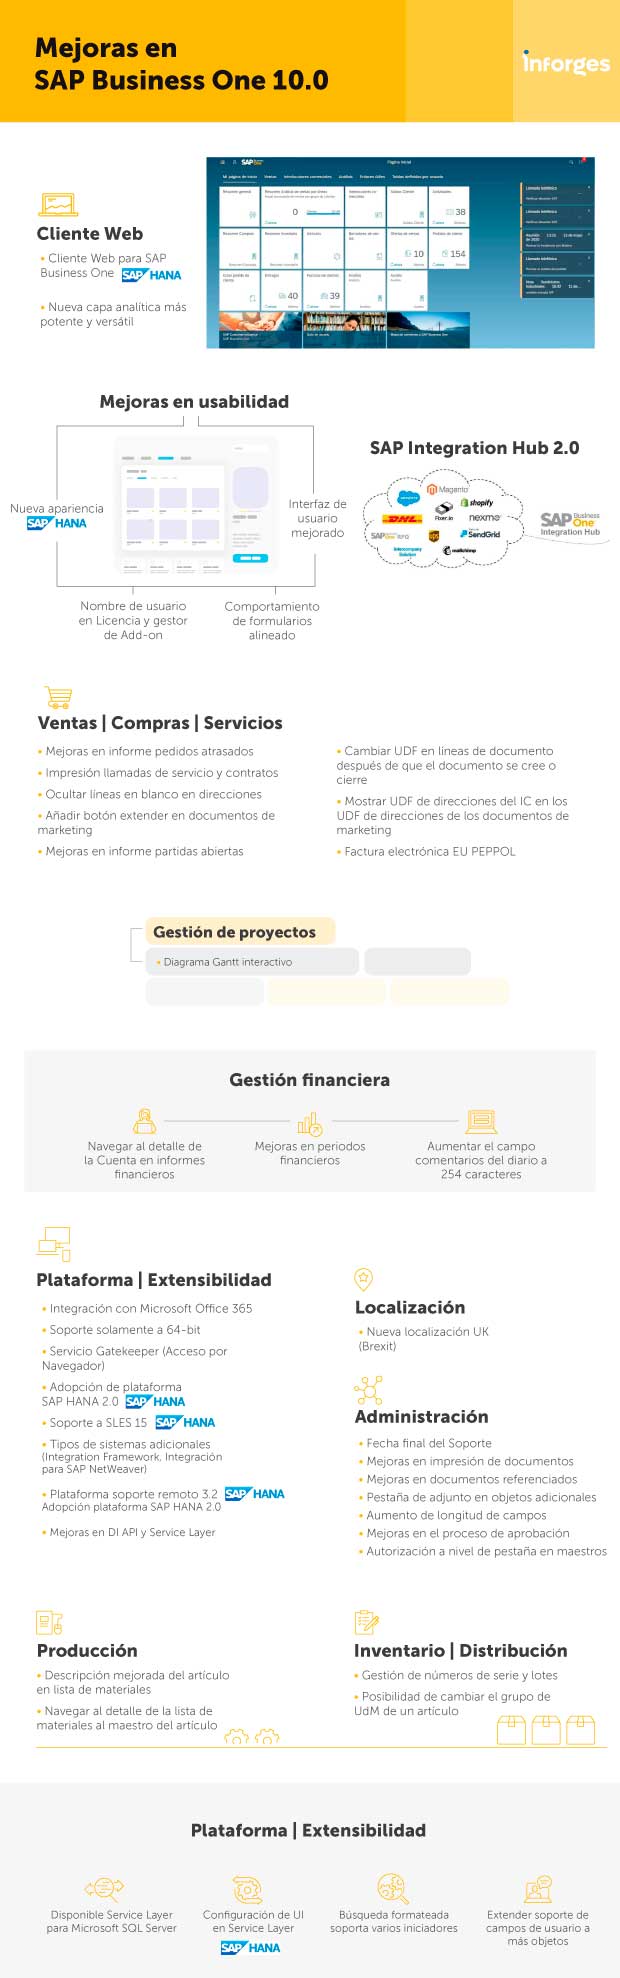 Mejoras en SAP Business One 10.0 | Infografía